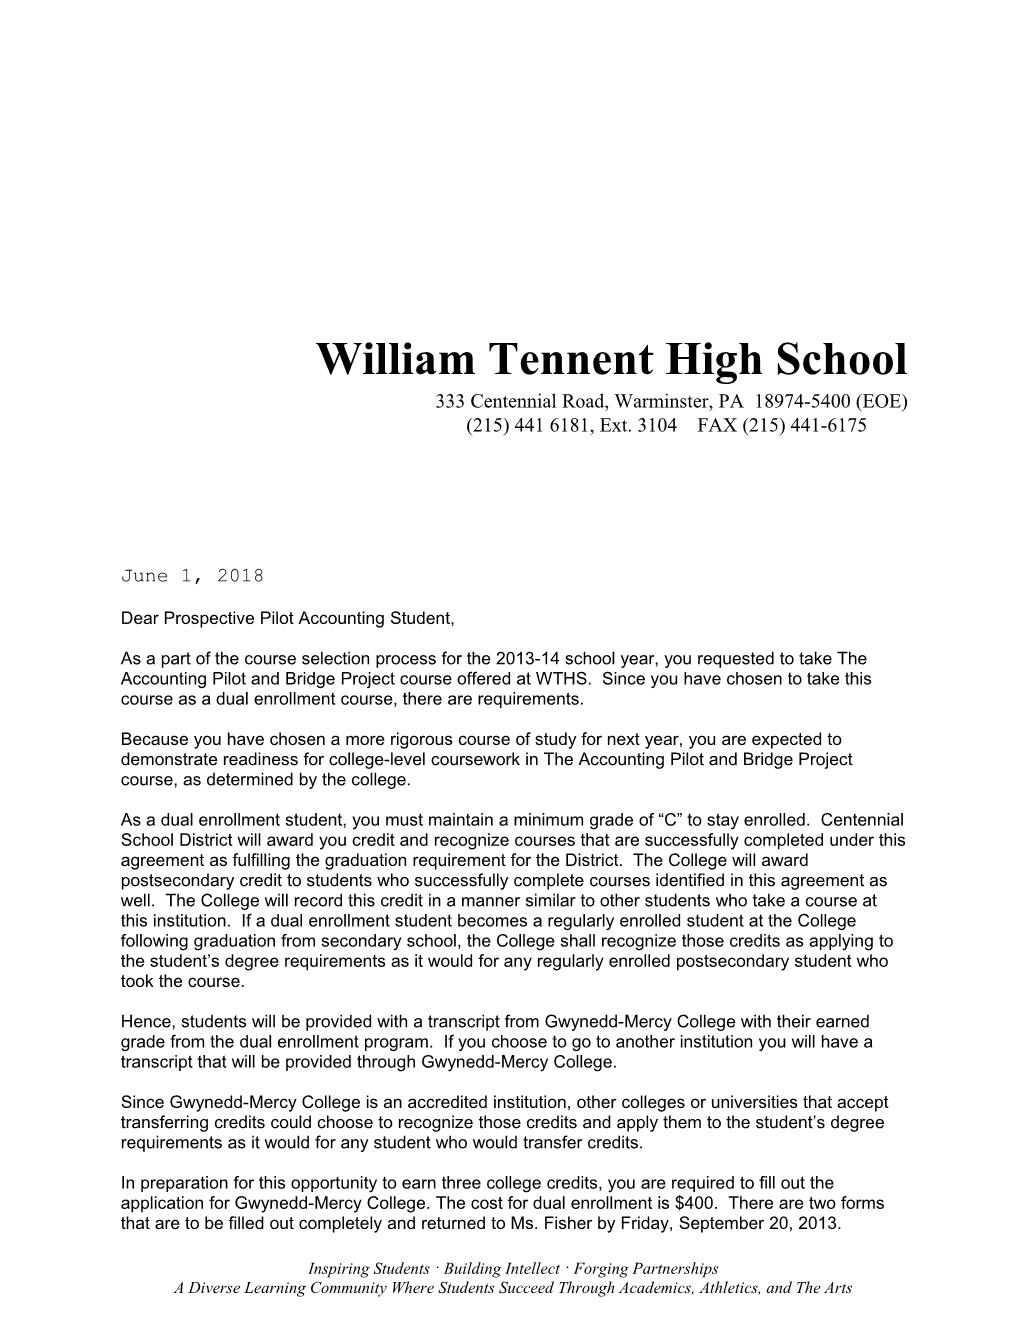 William Tennent High School s1